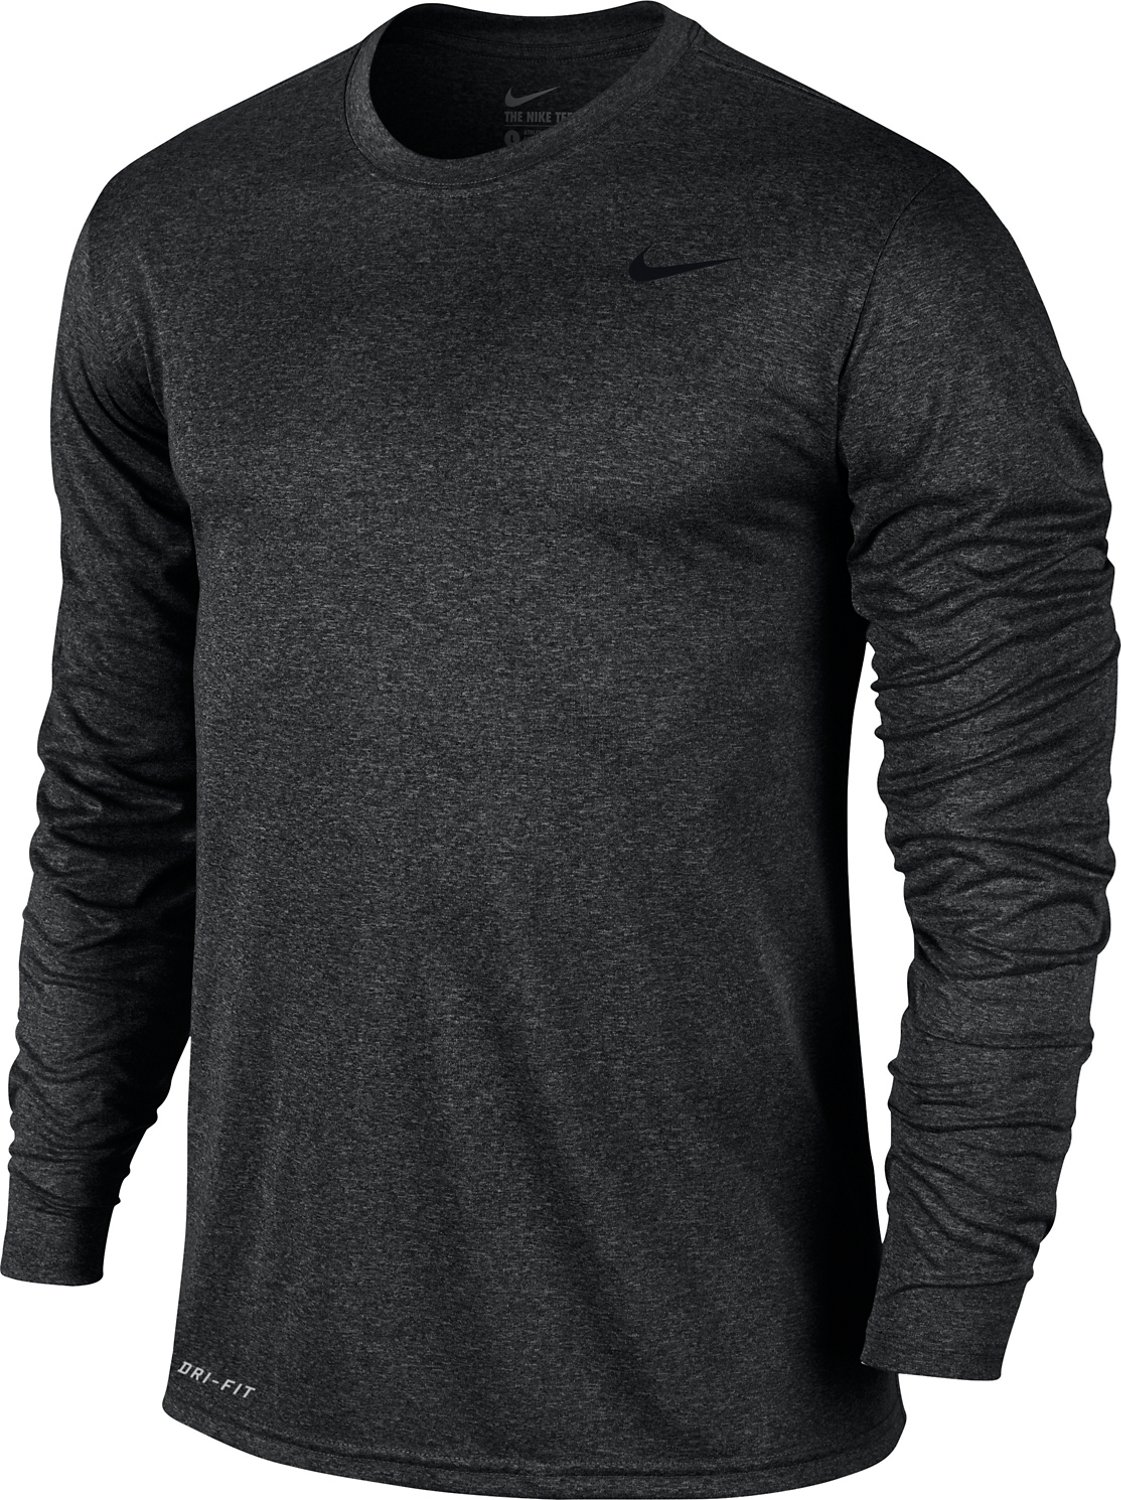 Nike Training Dri-FIT One long sleeve t-shirt in black